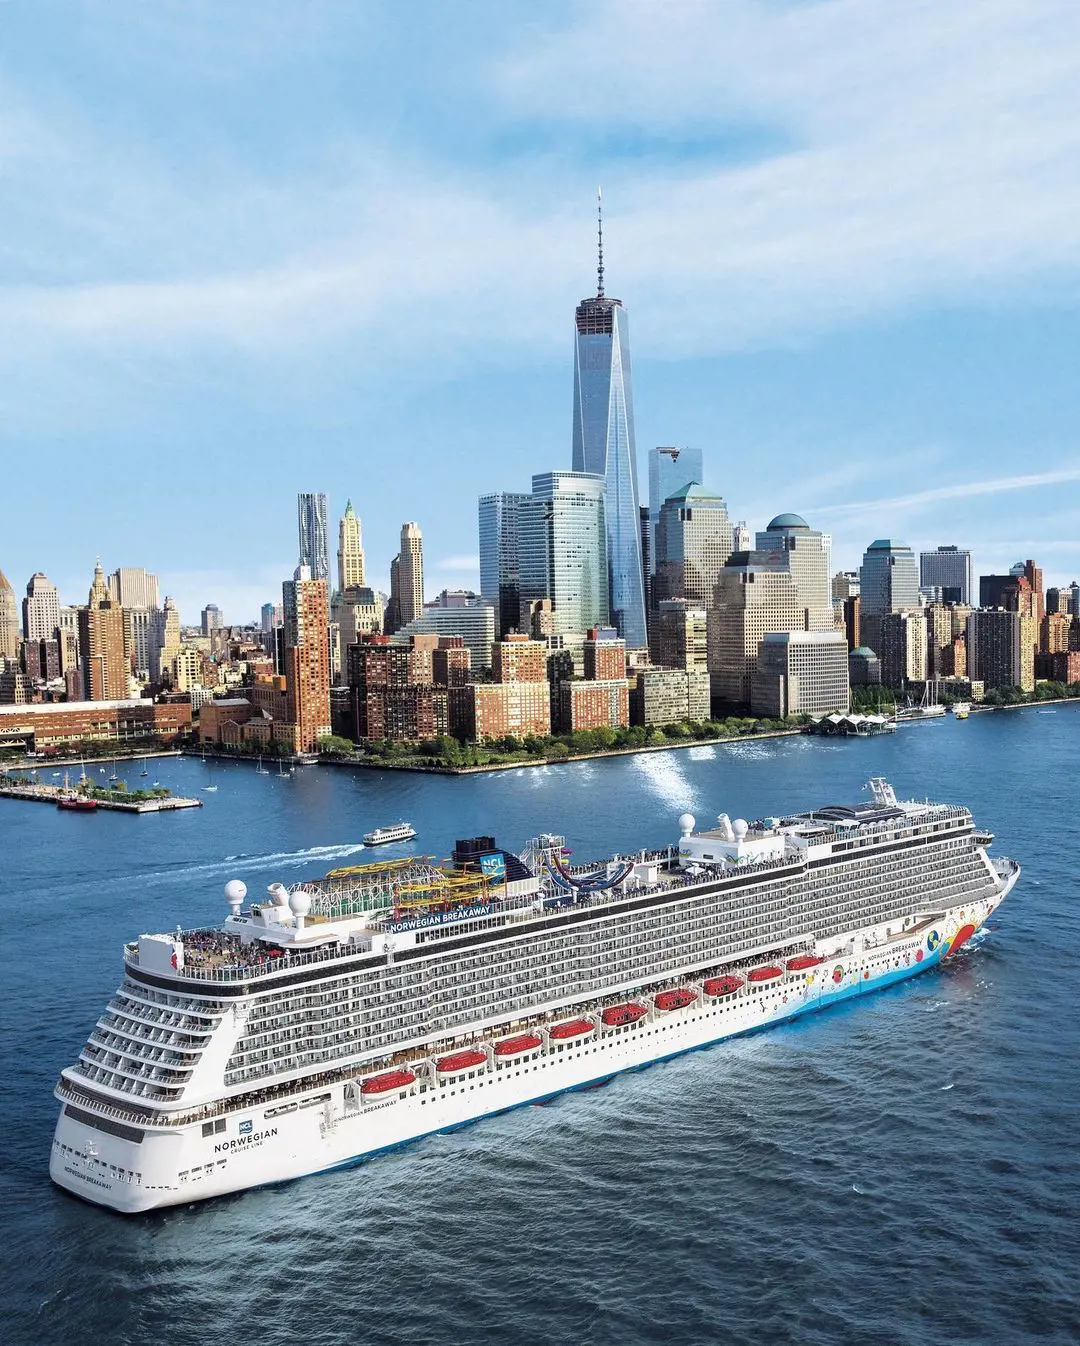 Norwegian Cruise Line has 17 ships on their fleet.